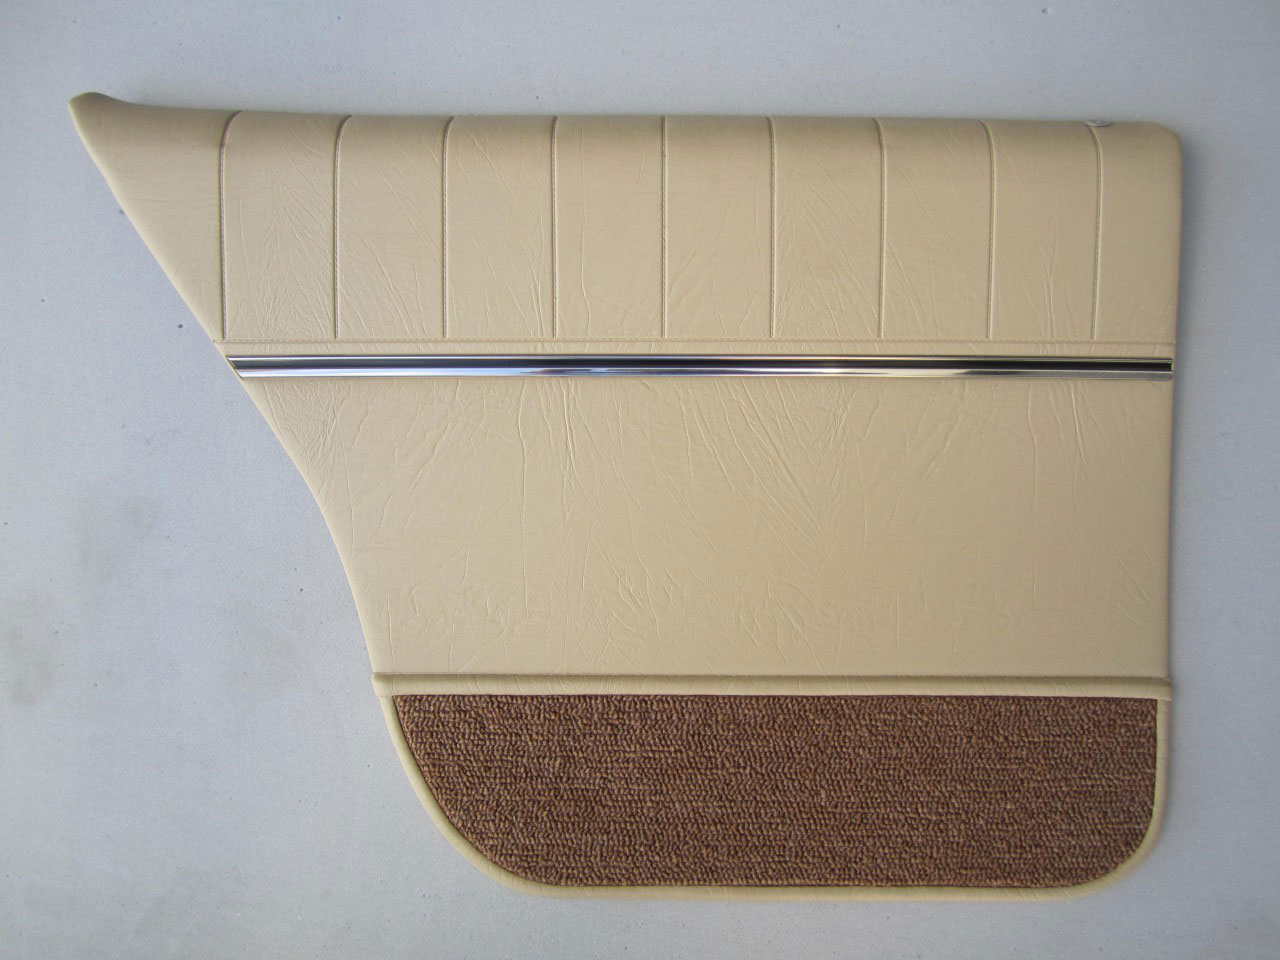 Holden Premier HQ Premier Sedan Mar73-74 38R Doeskin Door Trims (Image 2 of 2)